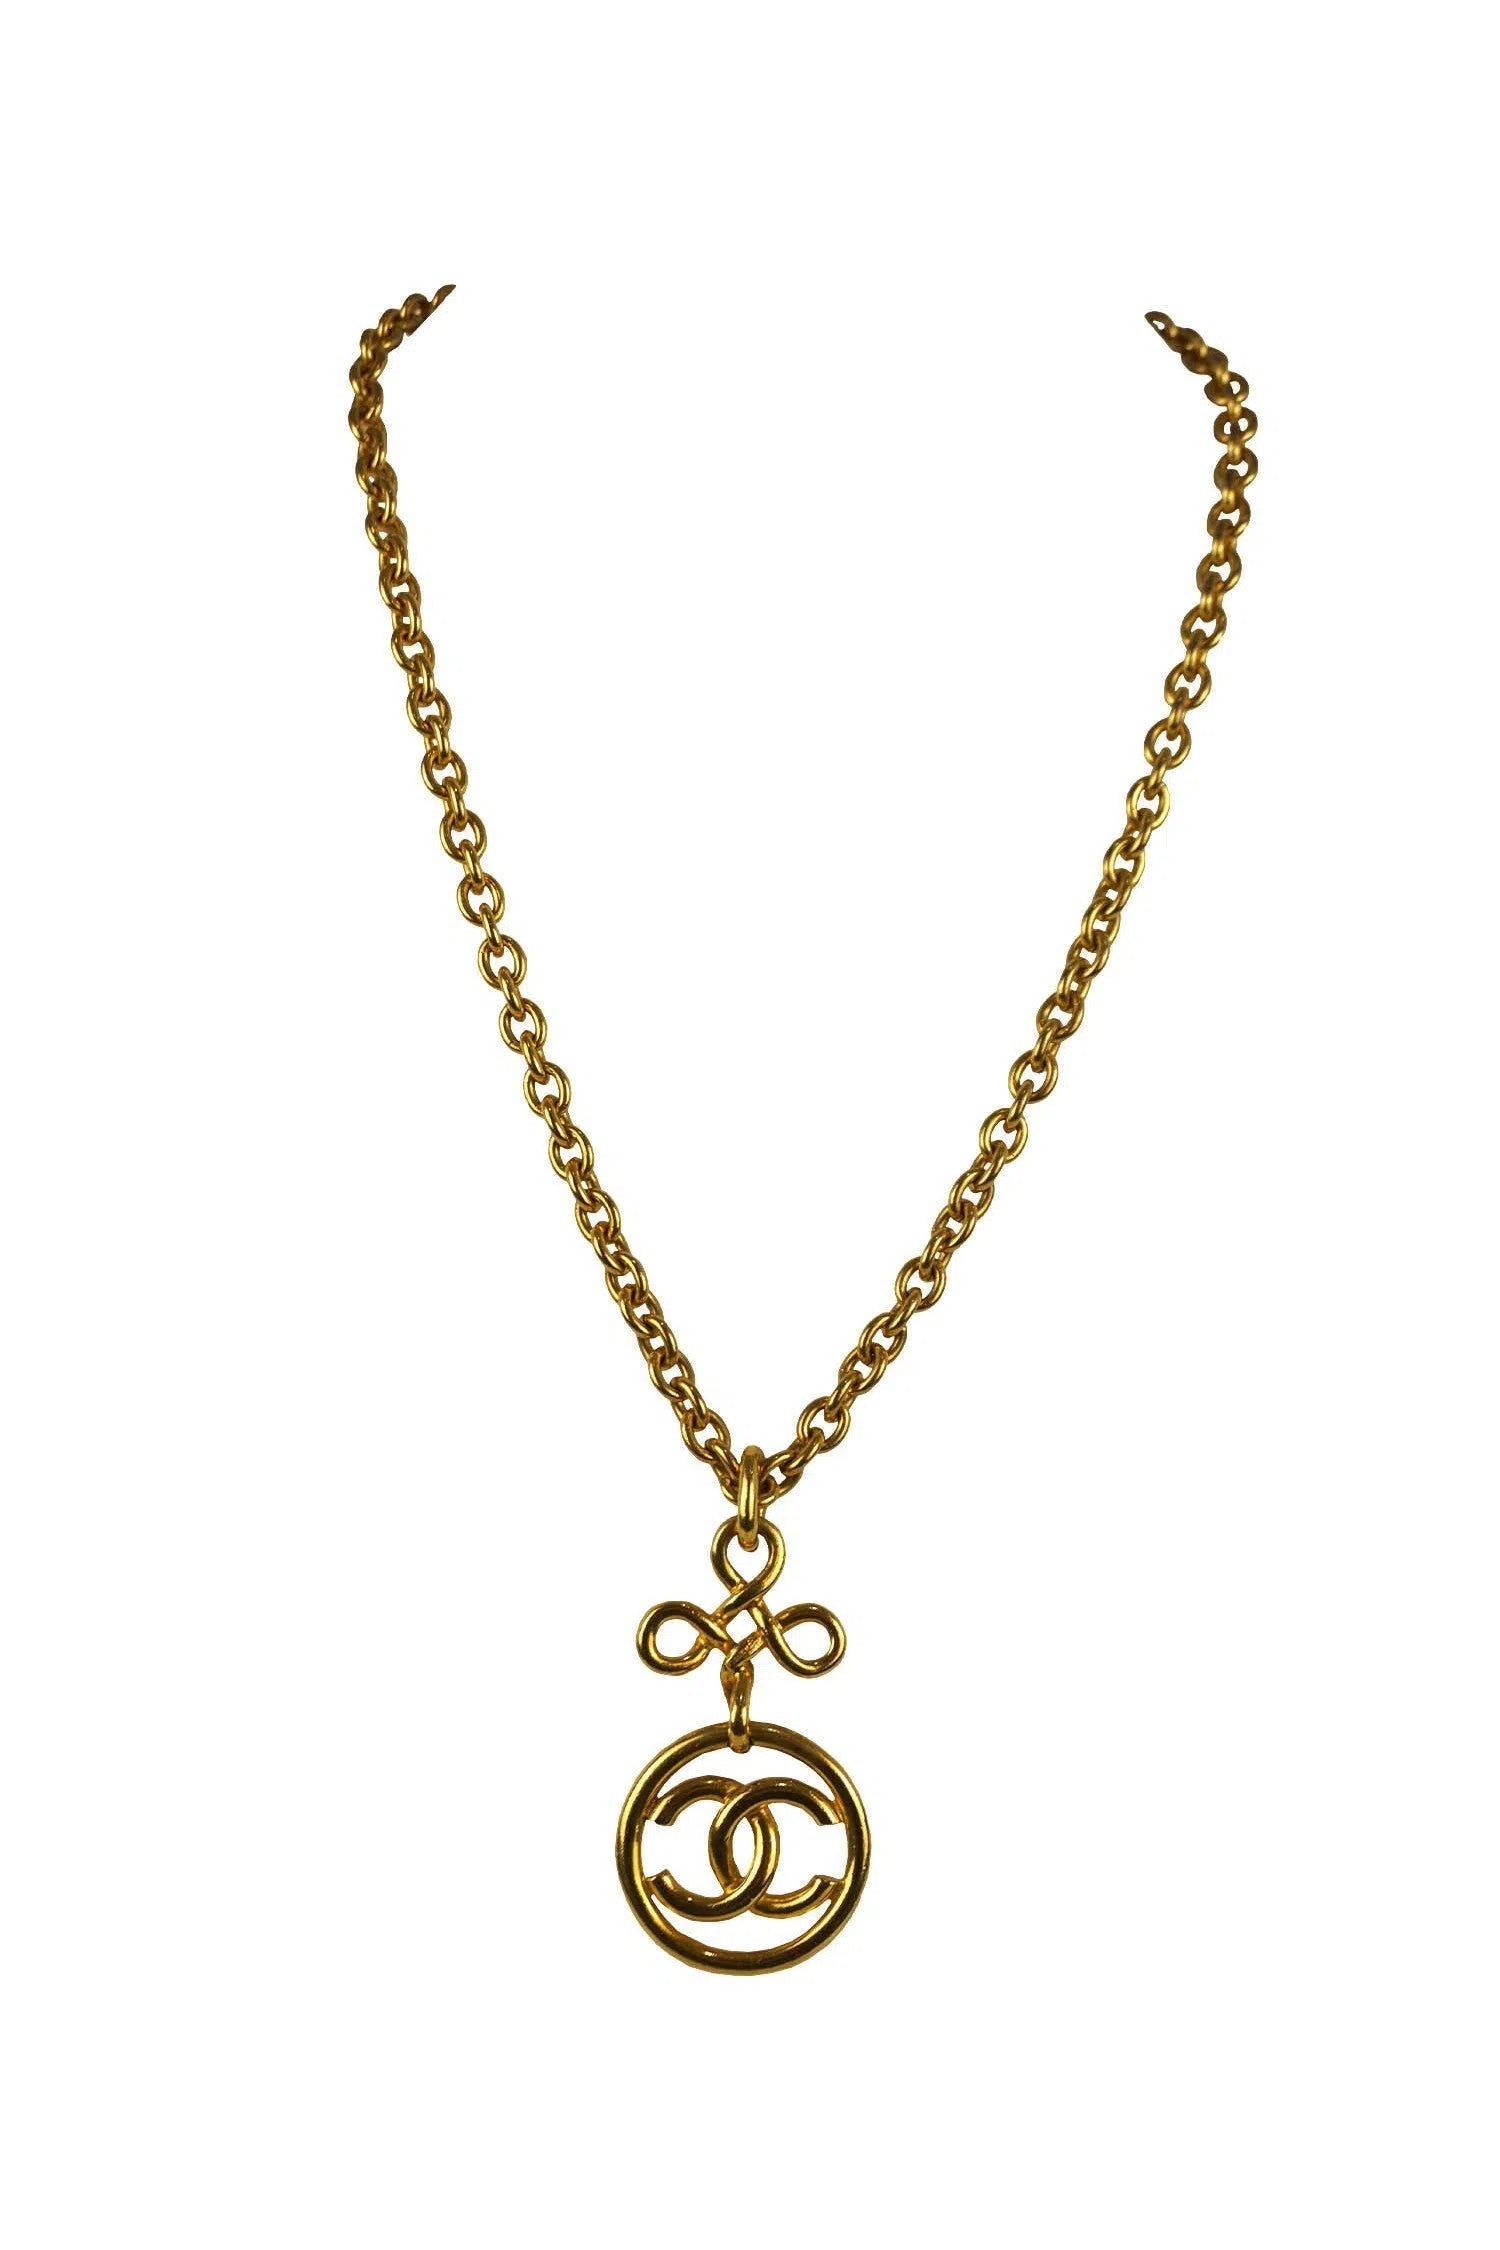 Chanel Vintage Twisted Cross CC Pendant Necklace 1993